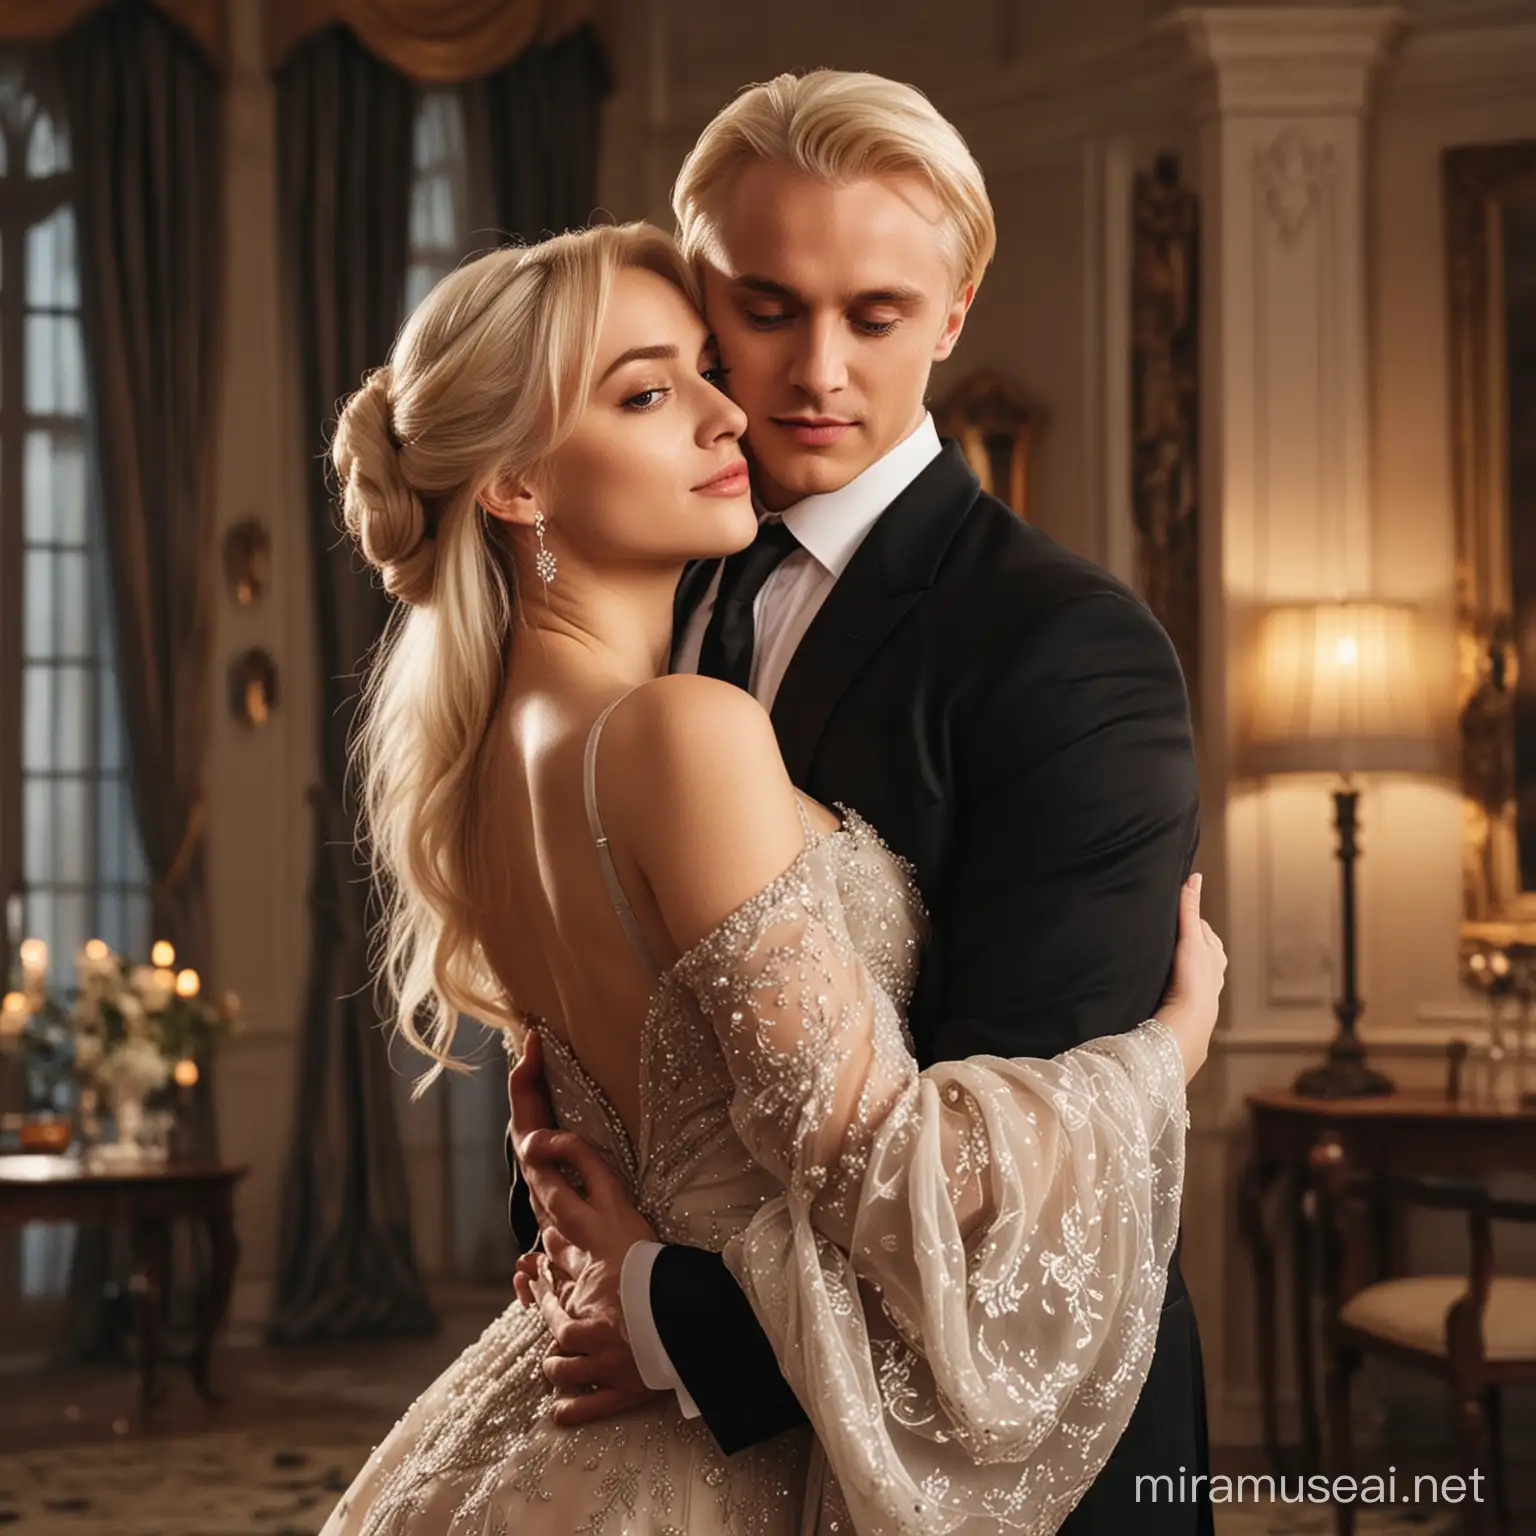 Elegant Draco Malfoy Embraces Stunning Blonde Lady in Evening Attire